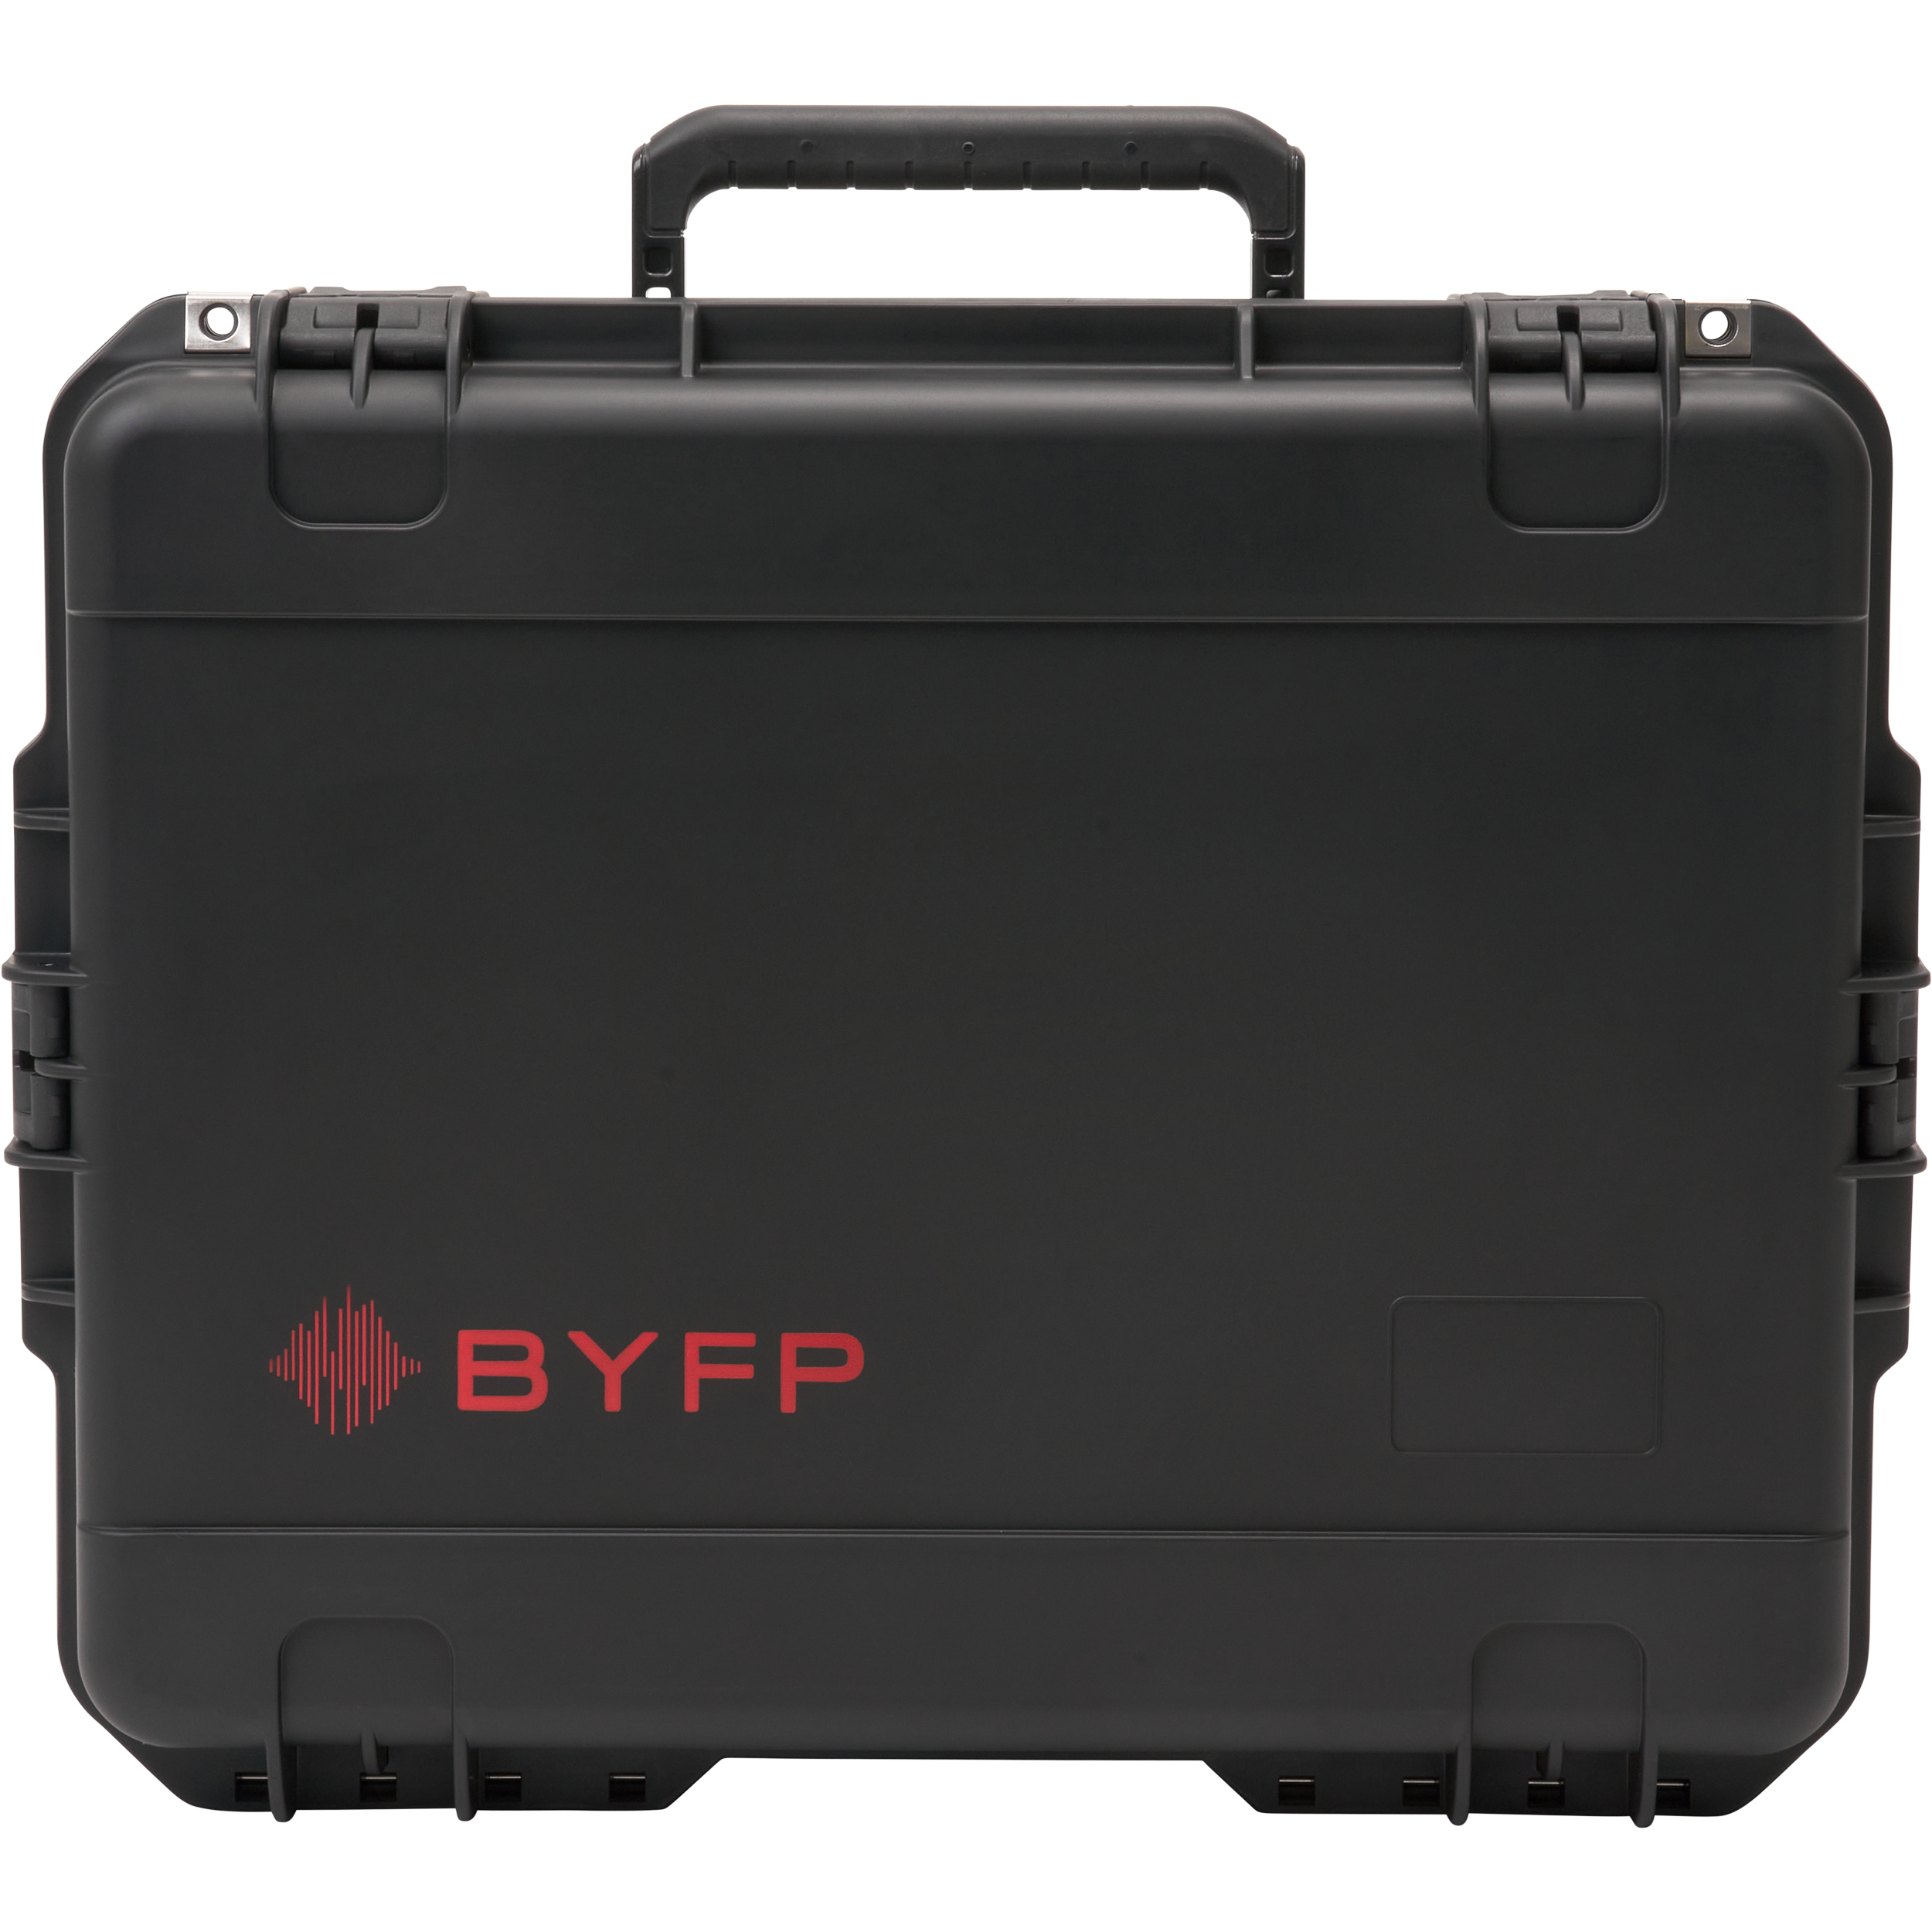 BYFP ipCase for 2x Chauvet Intimidator Beam Q60